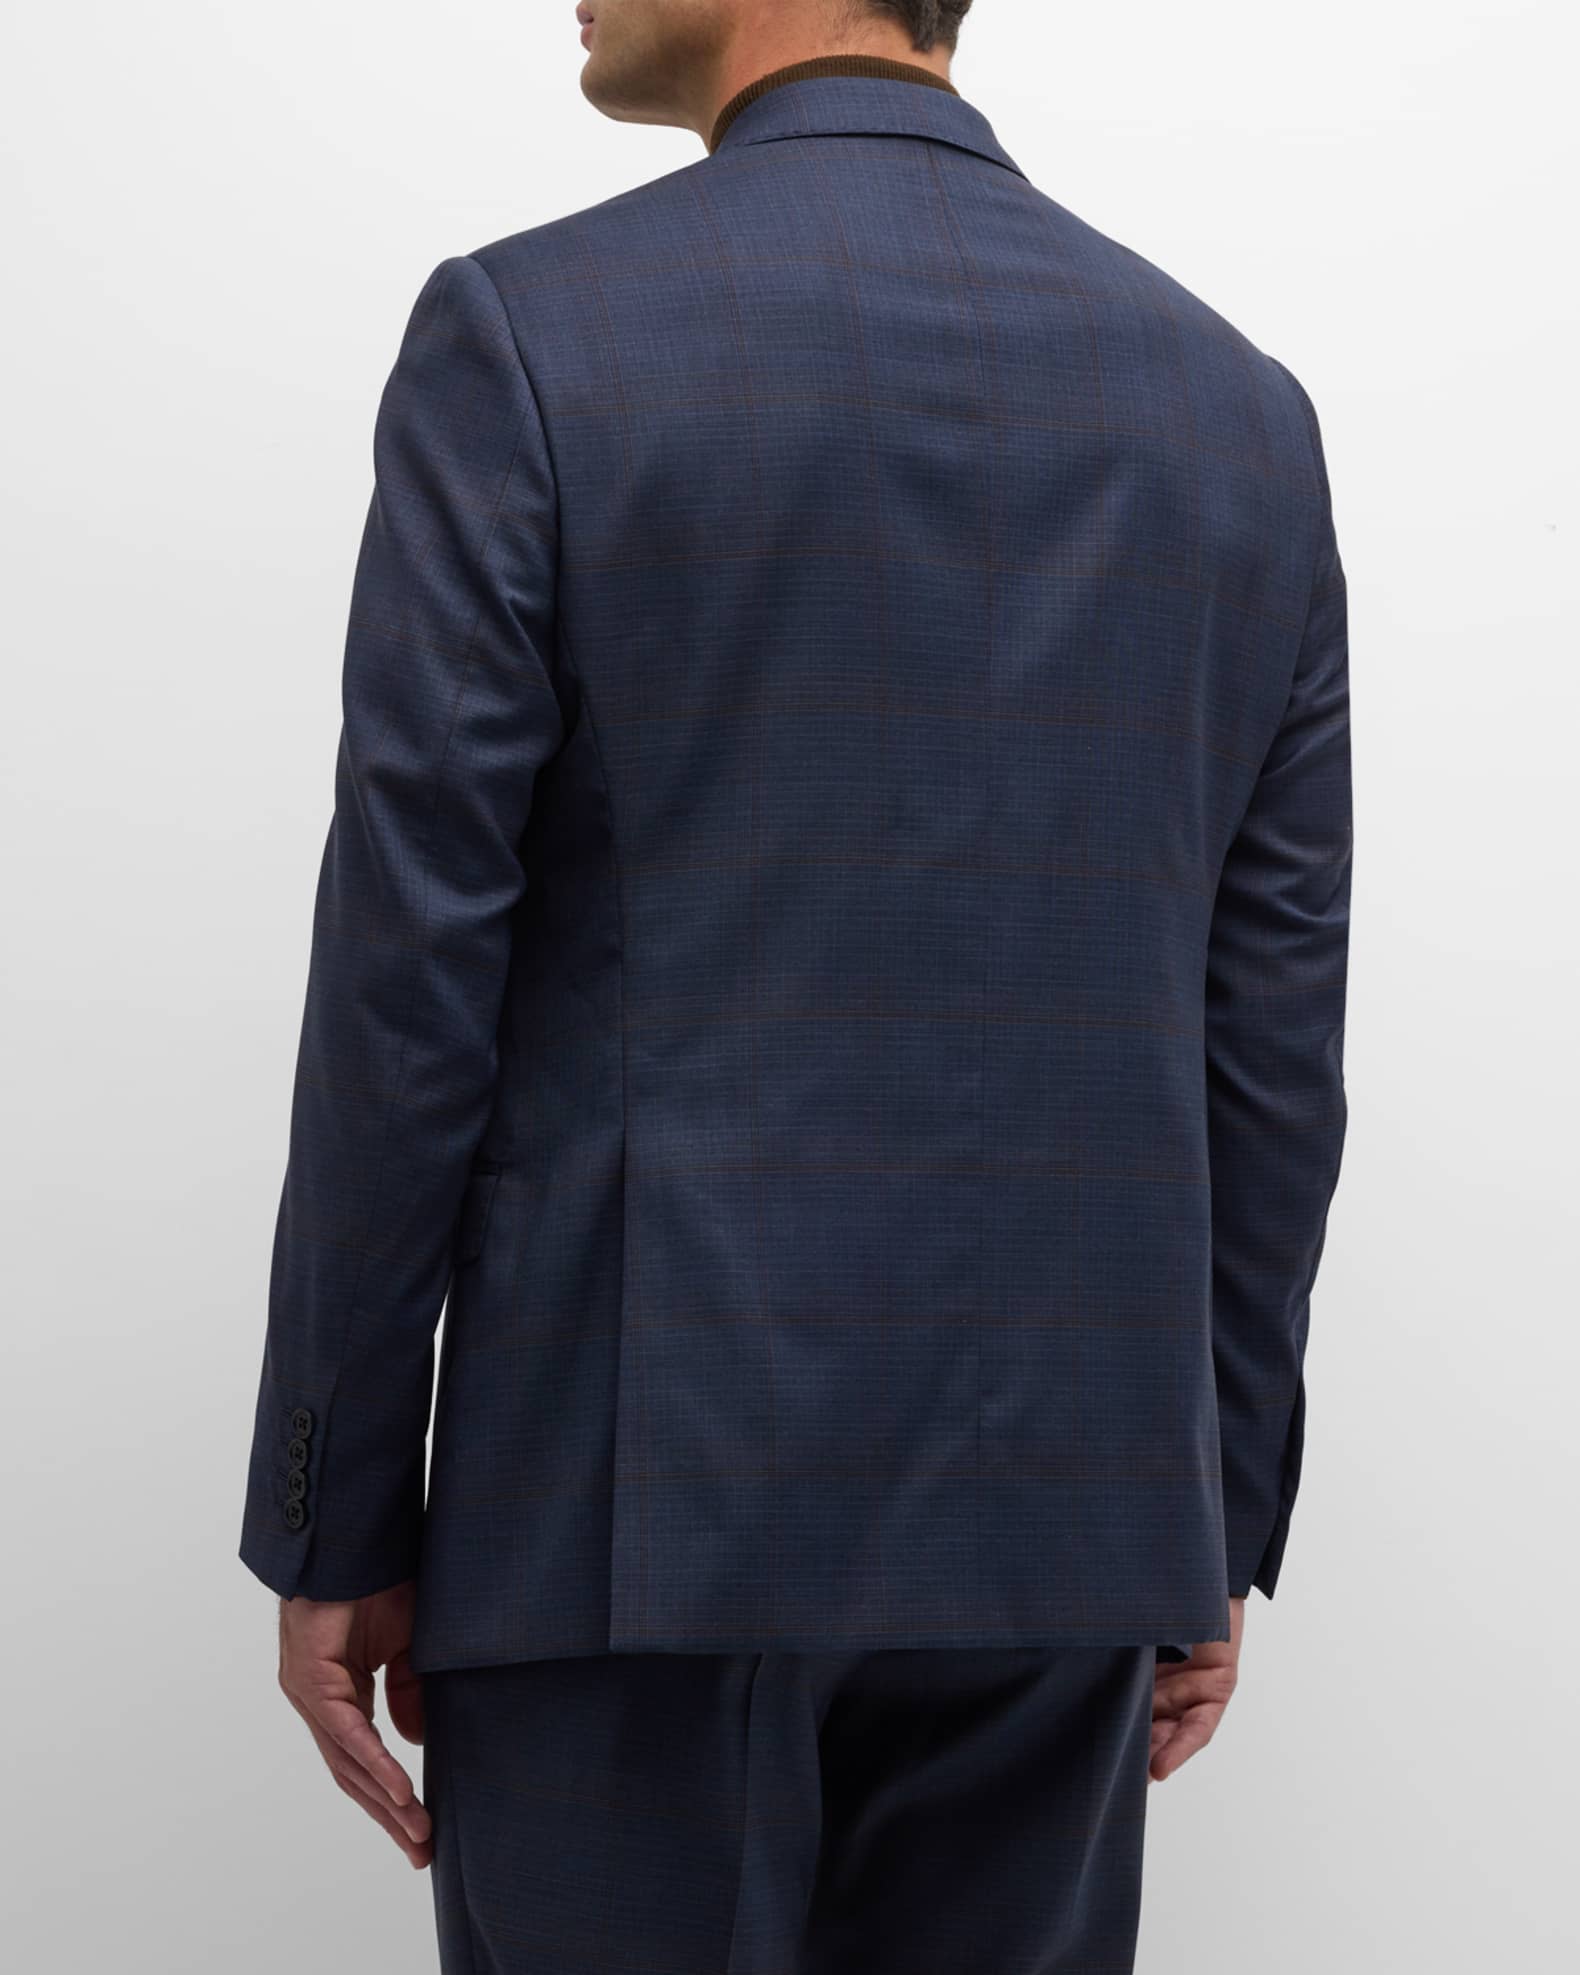 Emporio Armani Men's Windowpane Wool Suit | Neiman Marcus